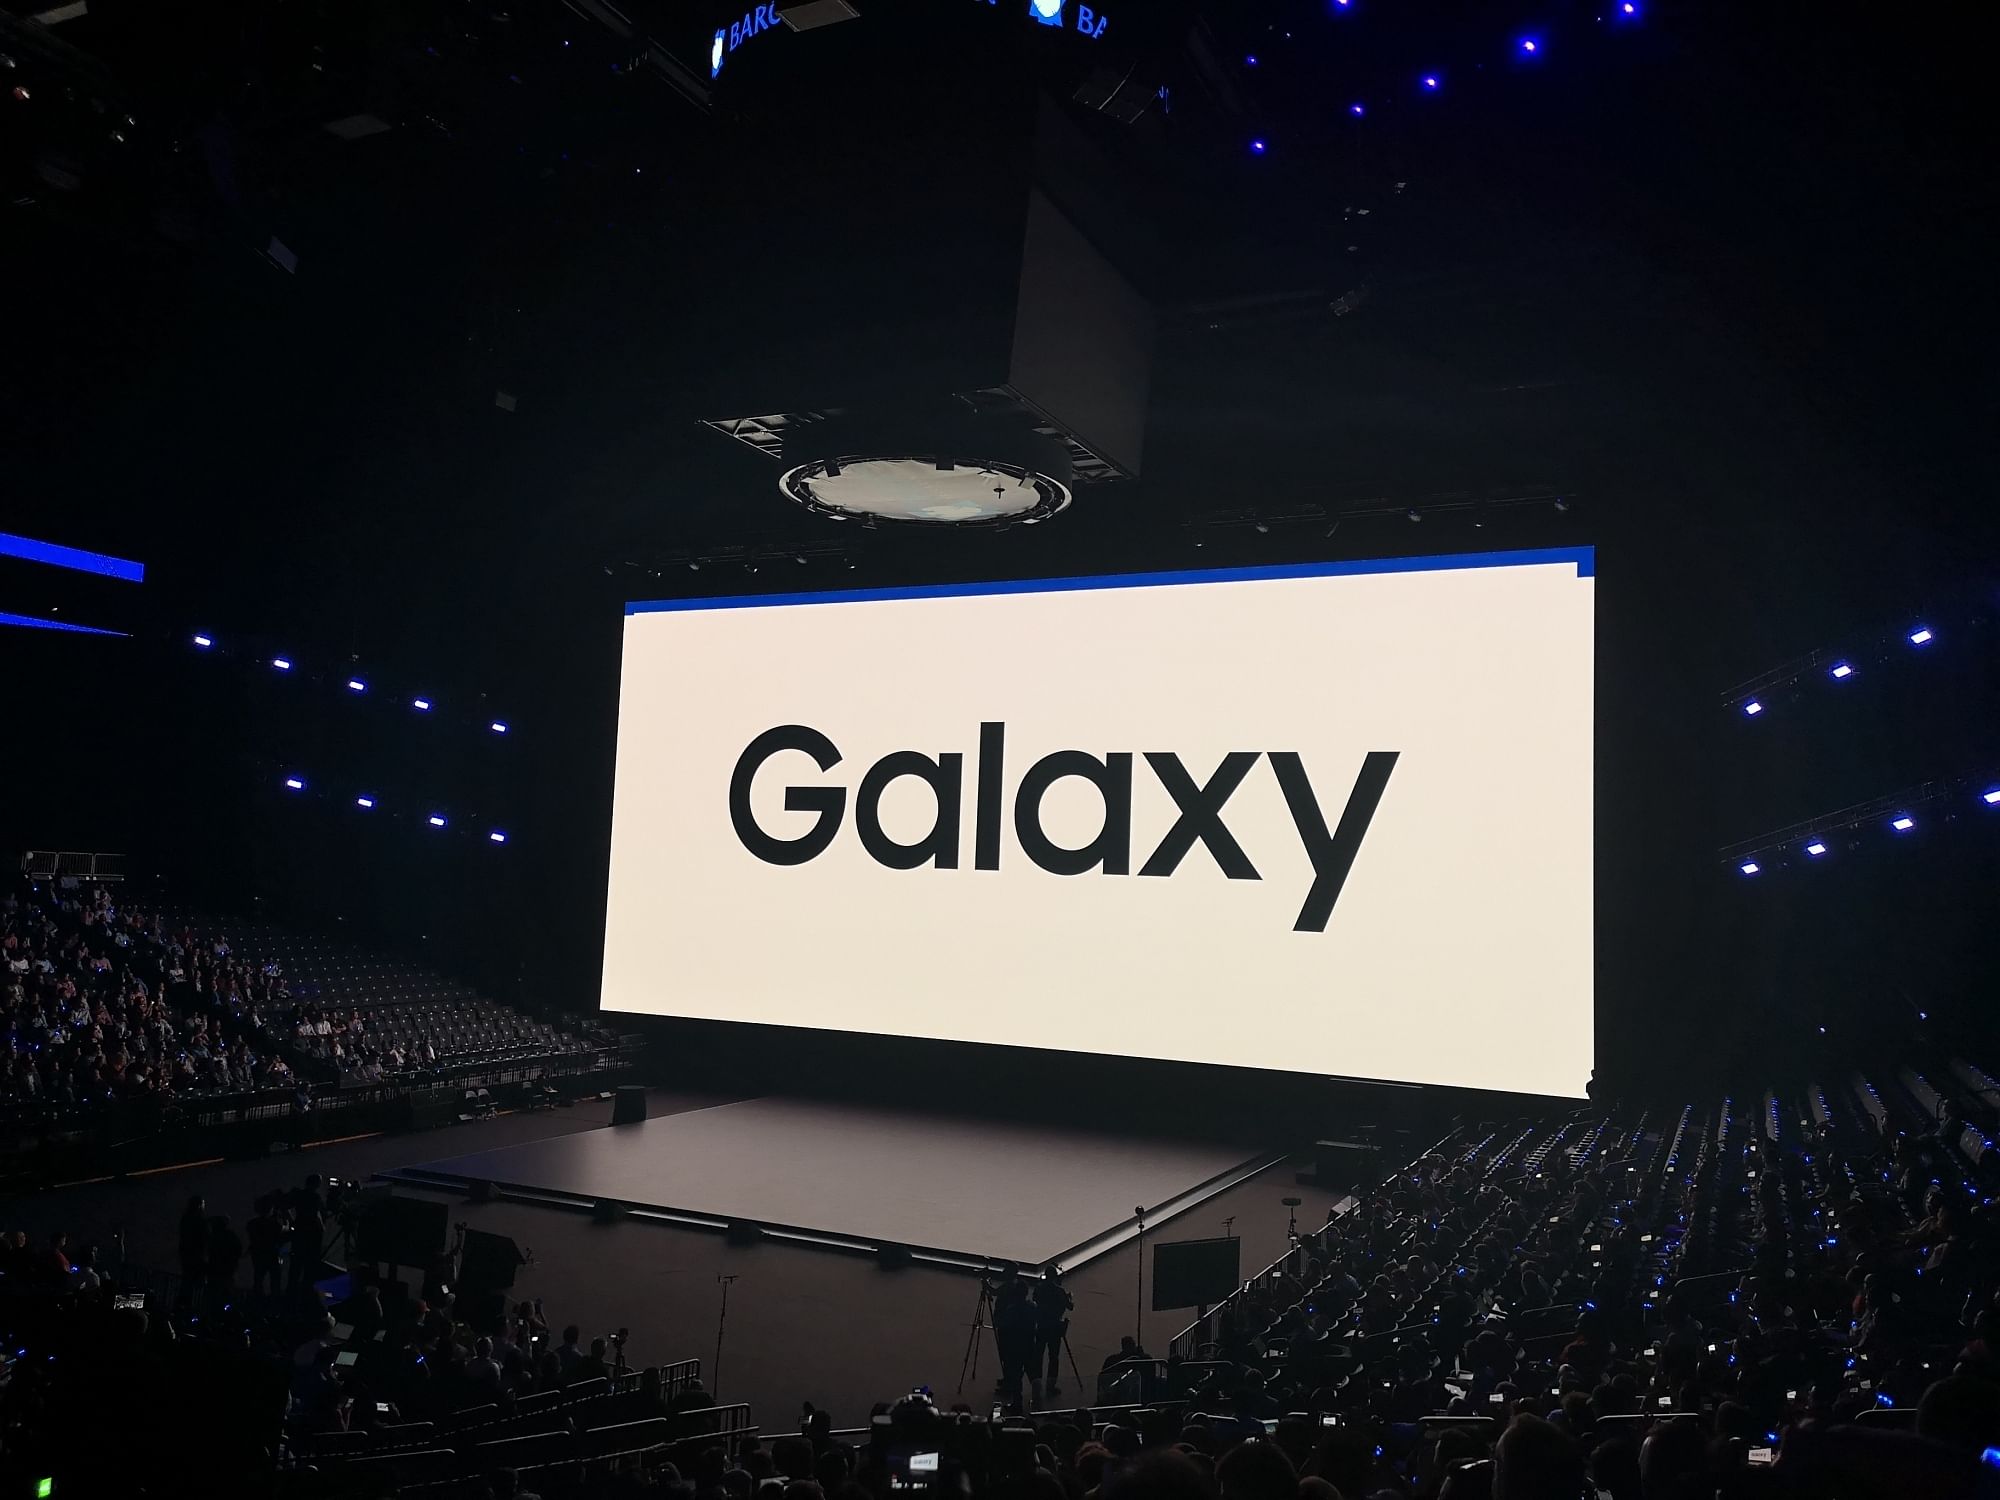 Samsung Galaxy F62 will launch on 15 February.